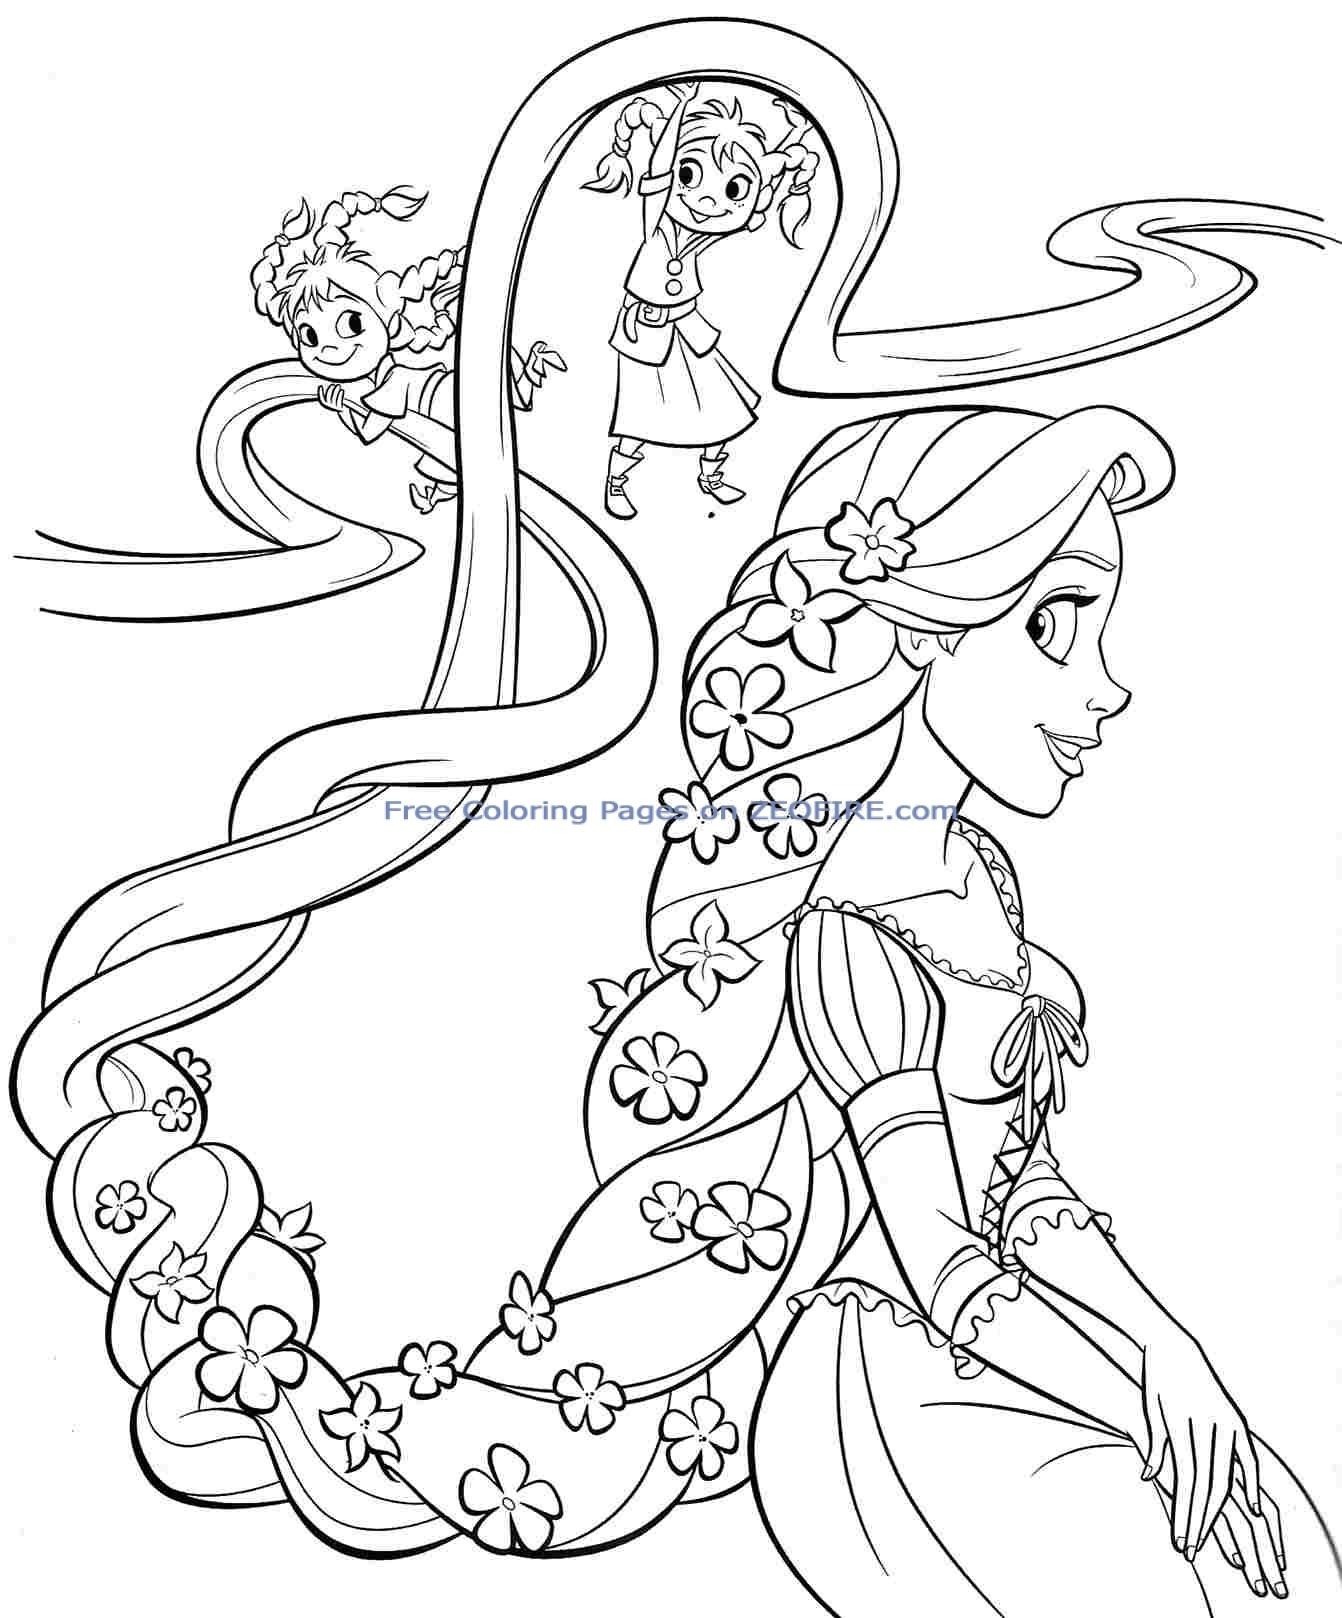 Pretty Princess Coloring Page